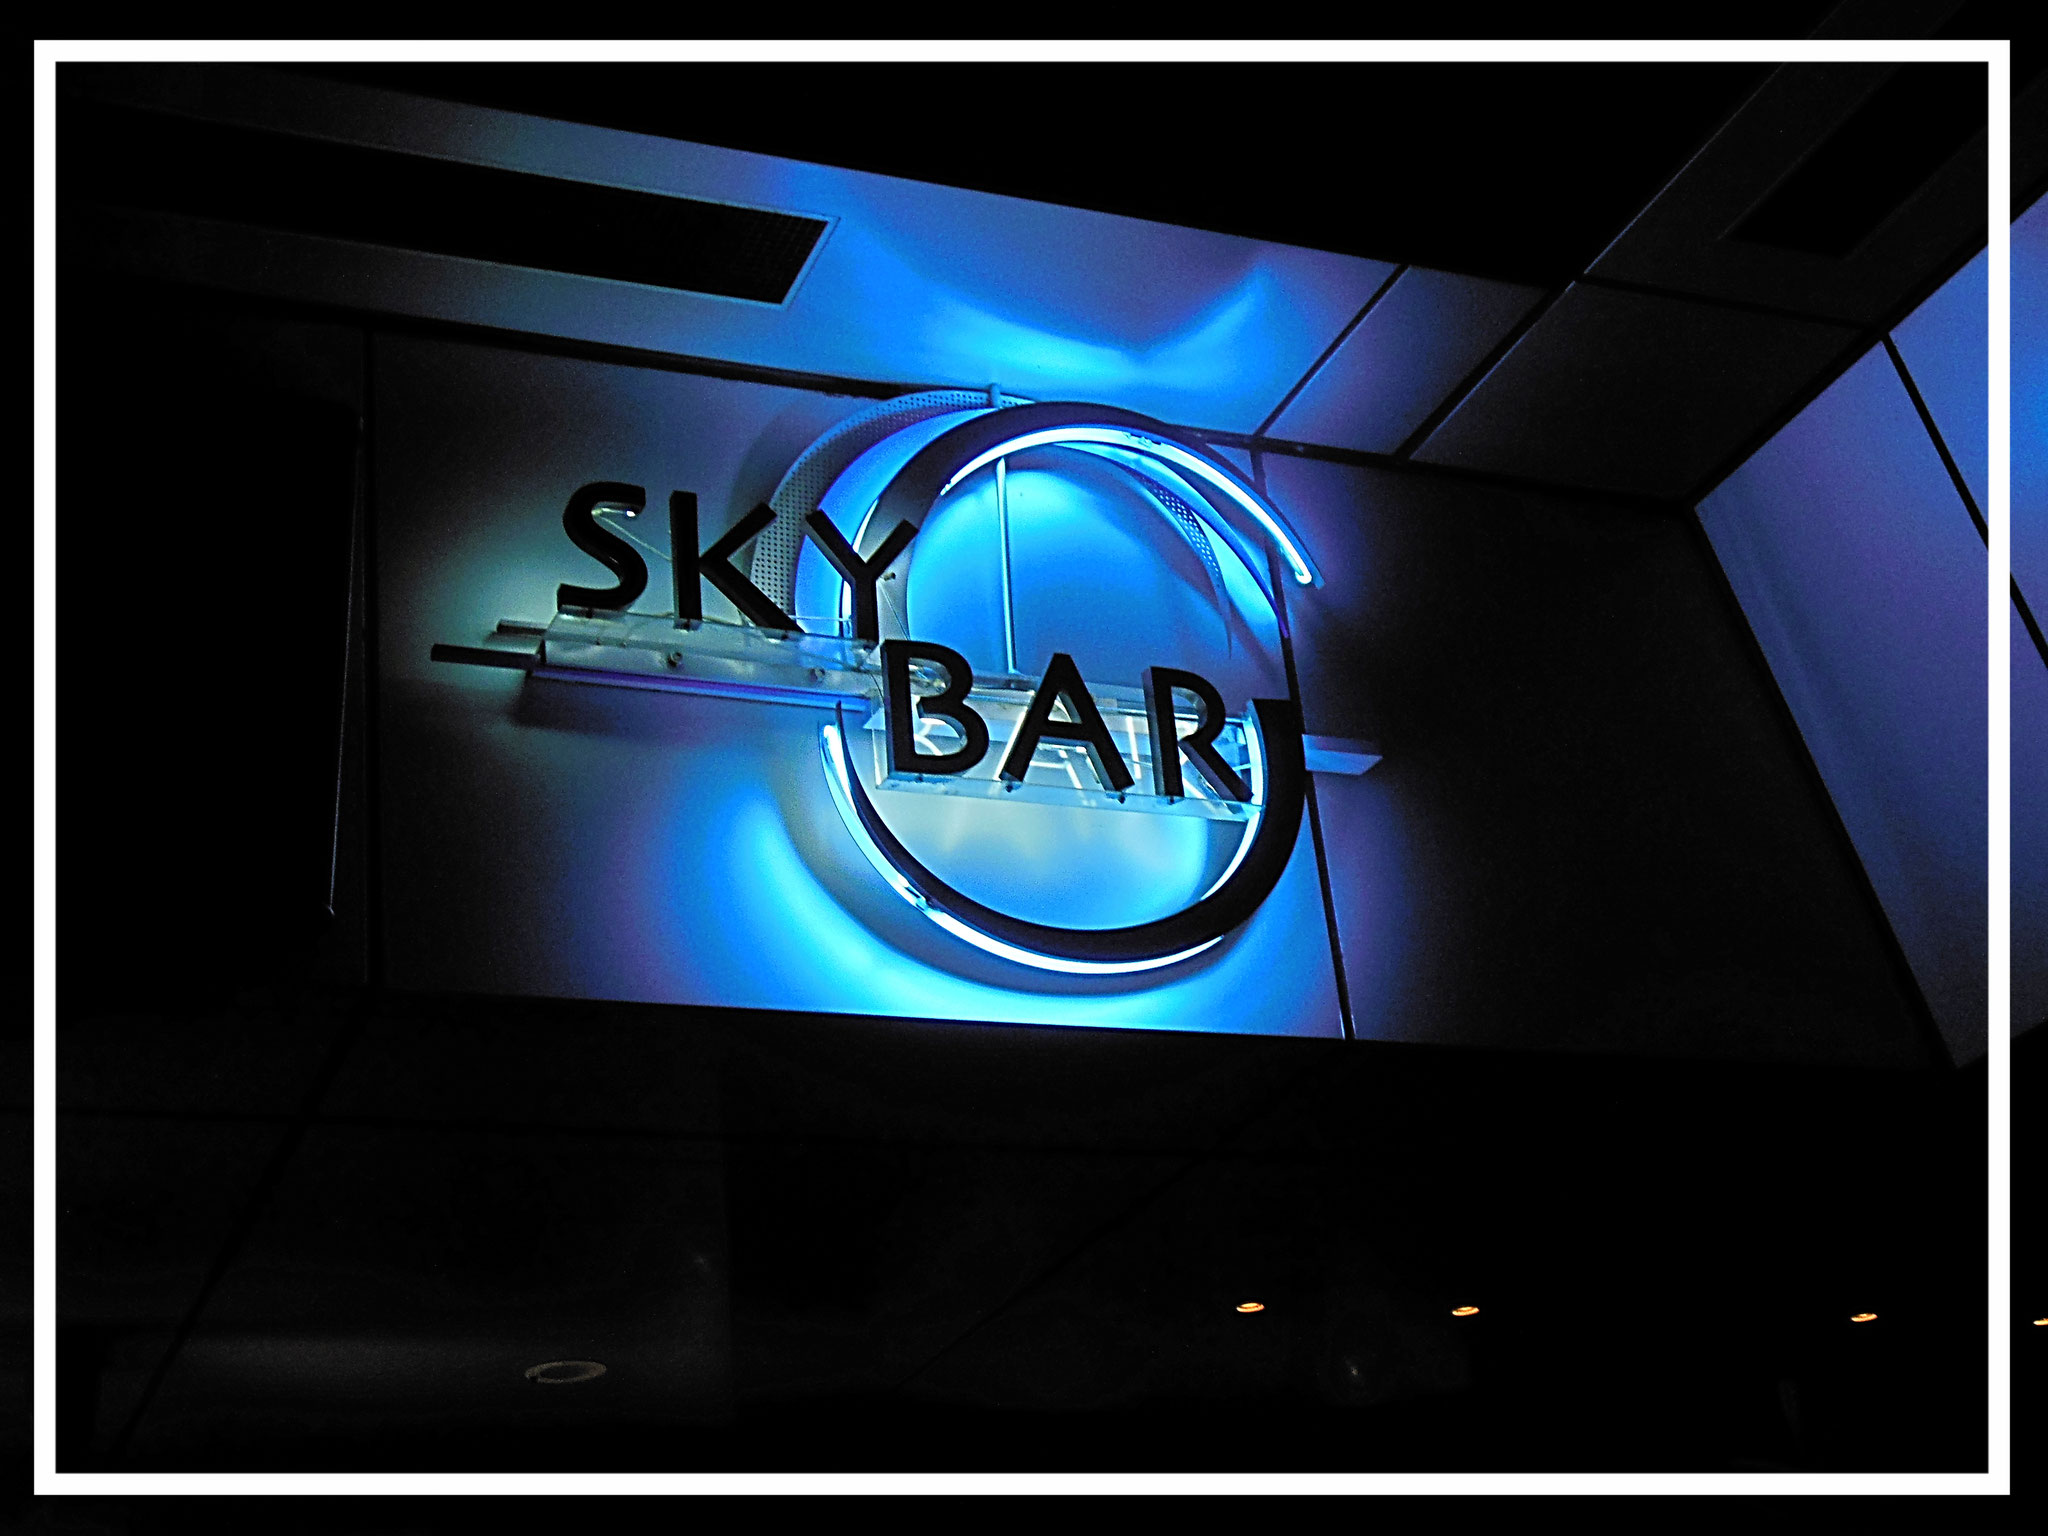 @Sky Bar